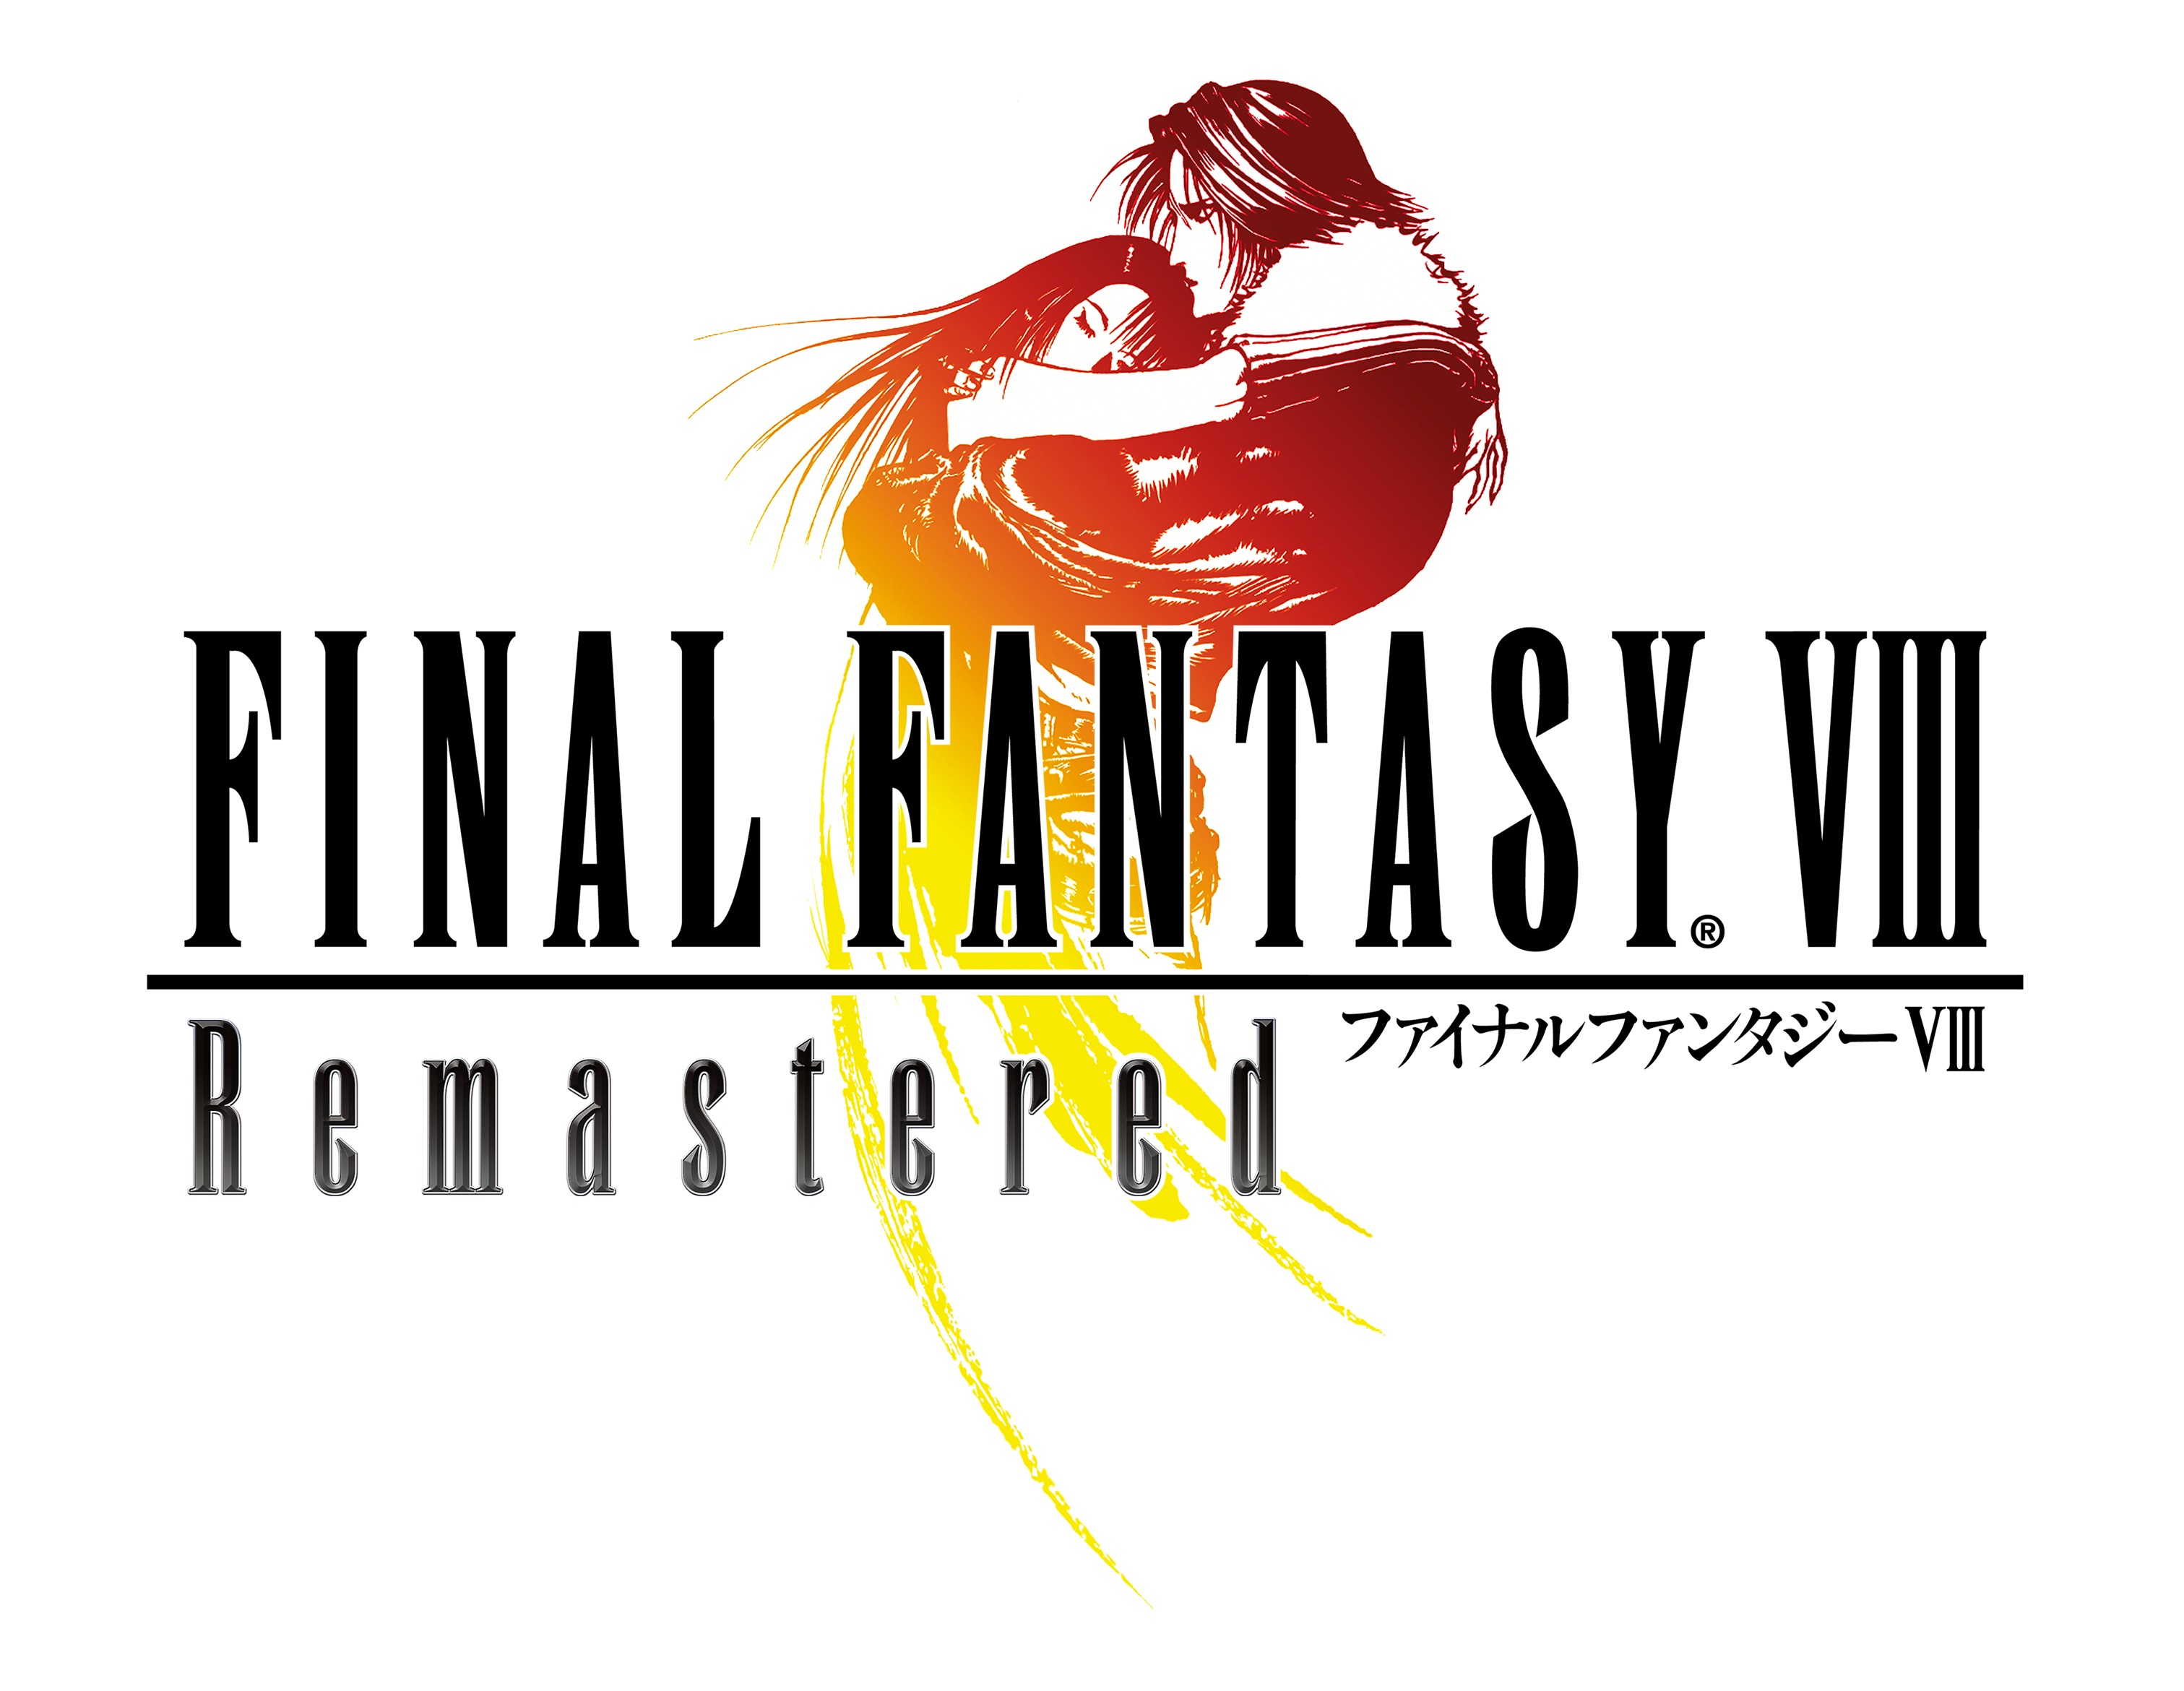 『FINAL FANTASY VIII Remastered』（ファイナルファンタジーVIII リマスタード）ロゴ